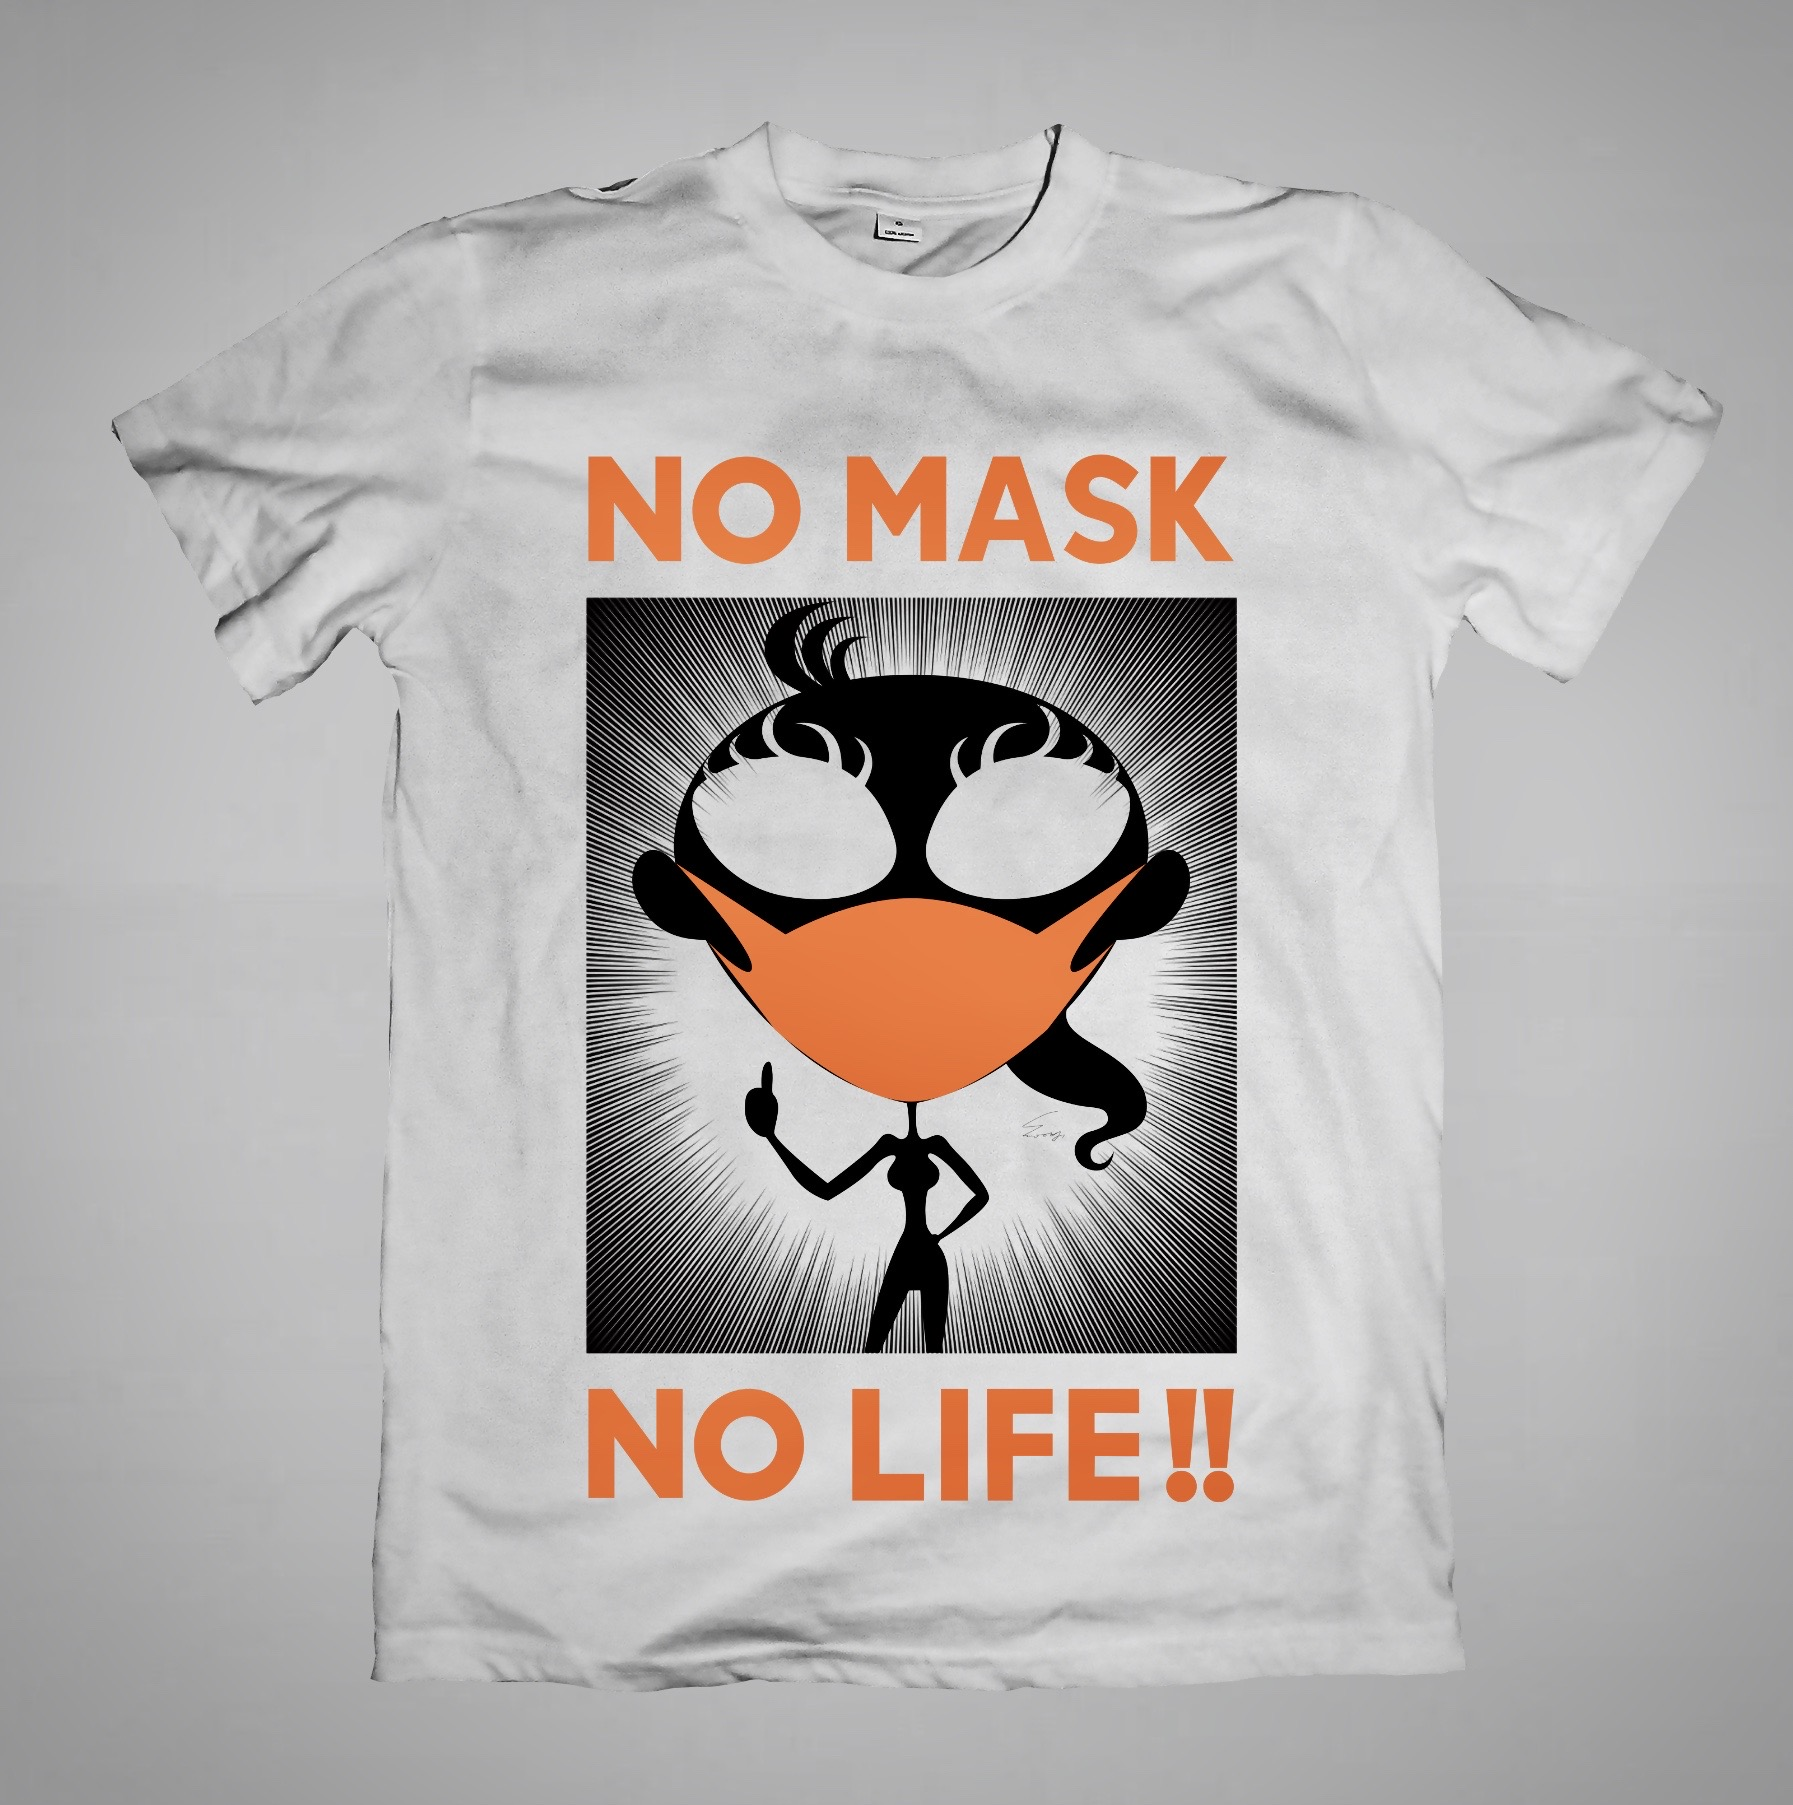 NO MASK NO LIFE !!